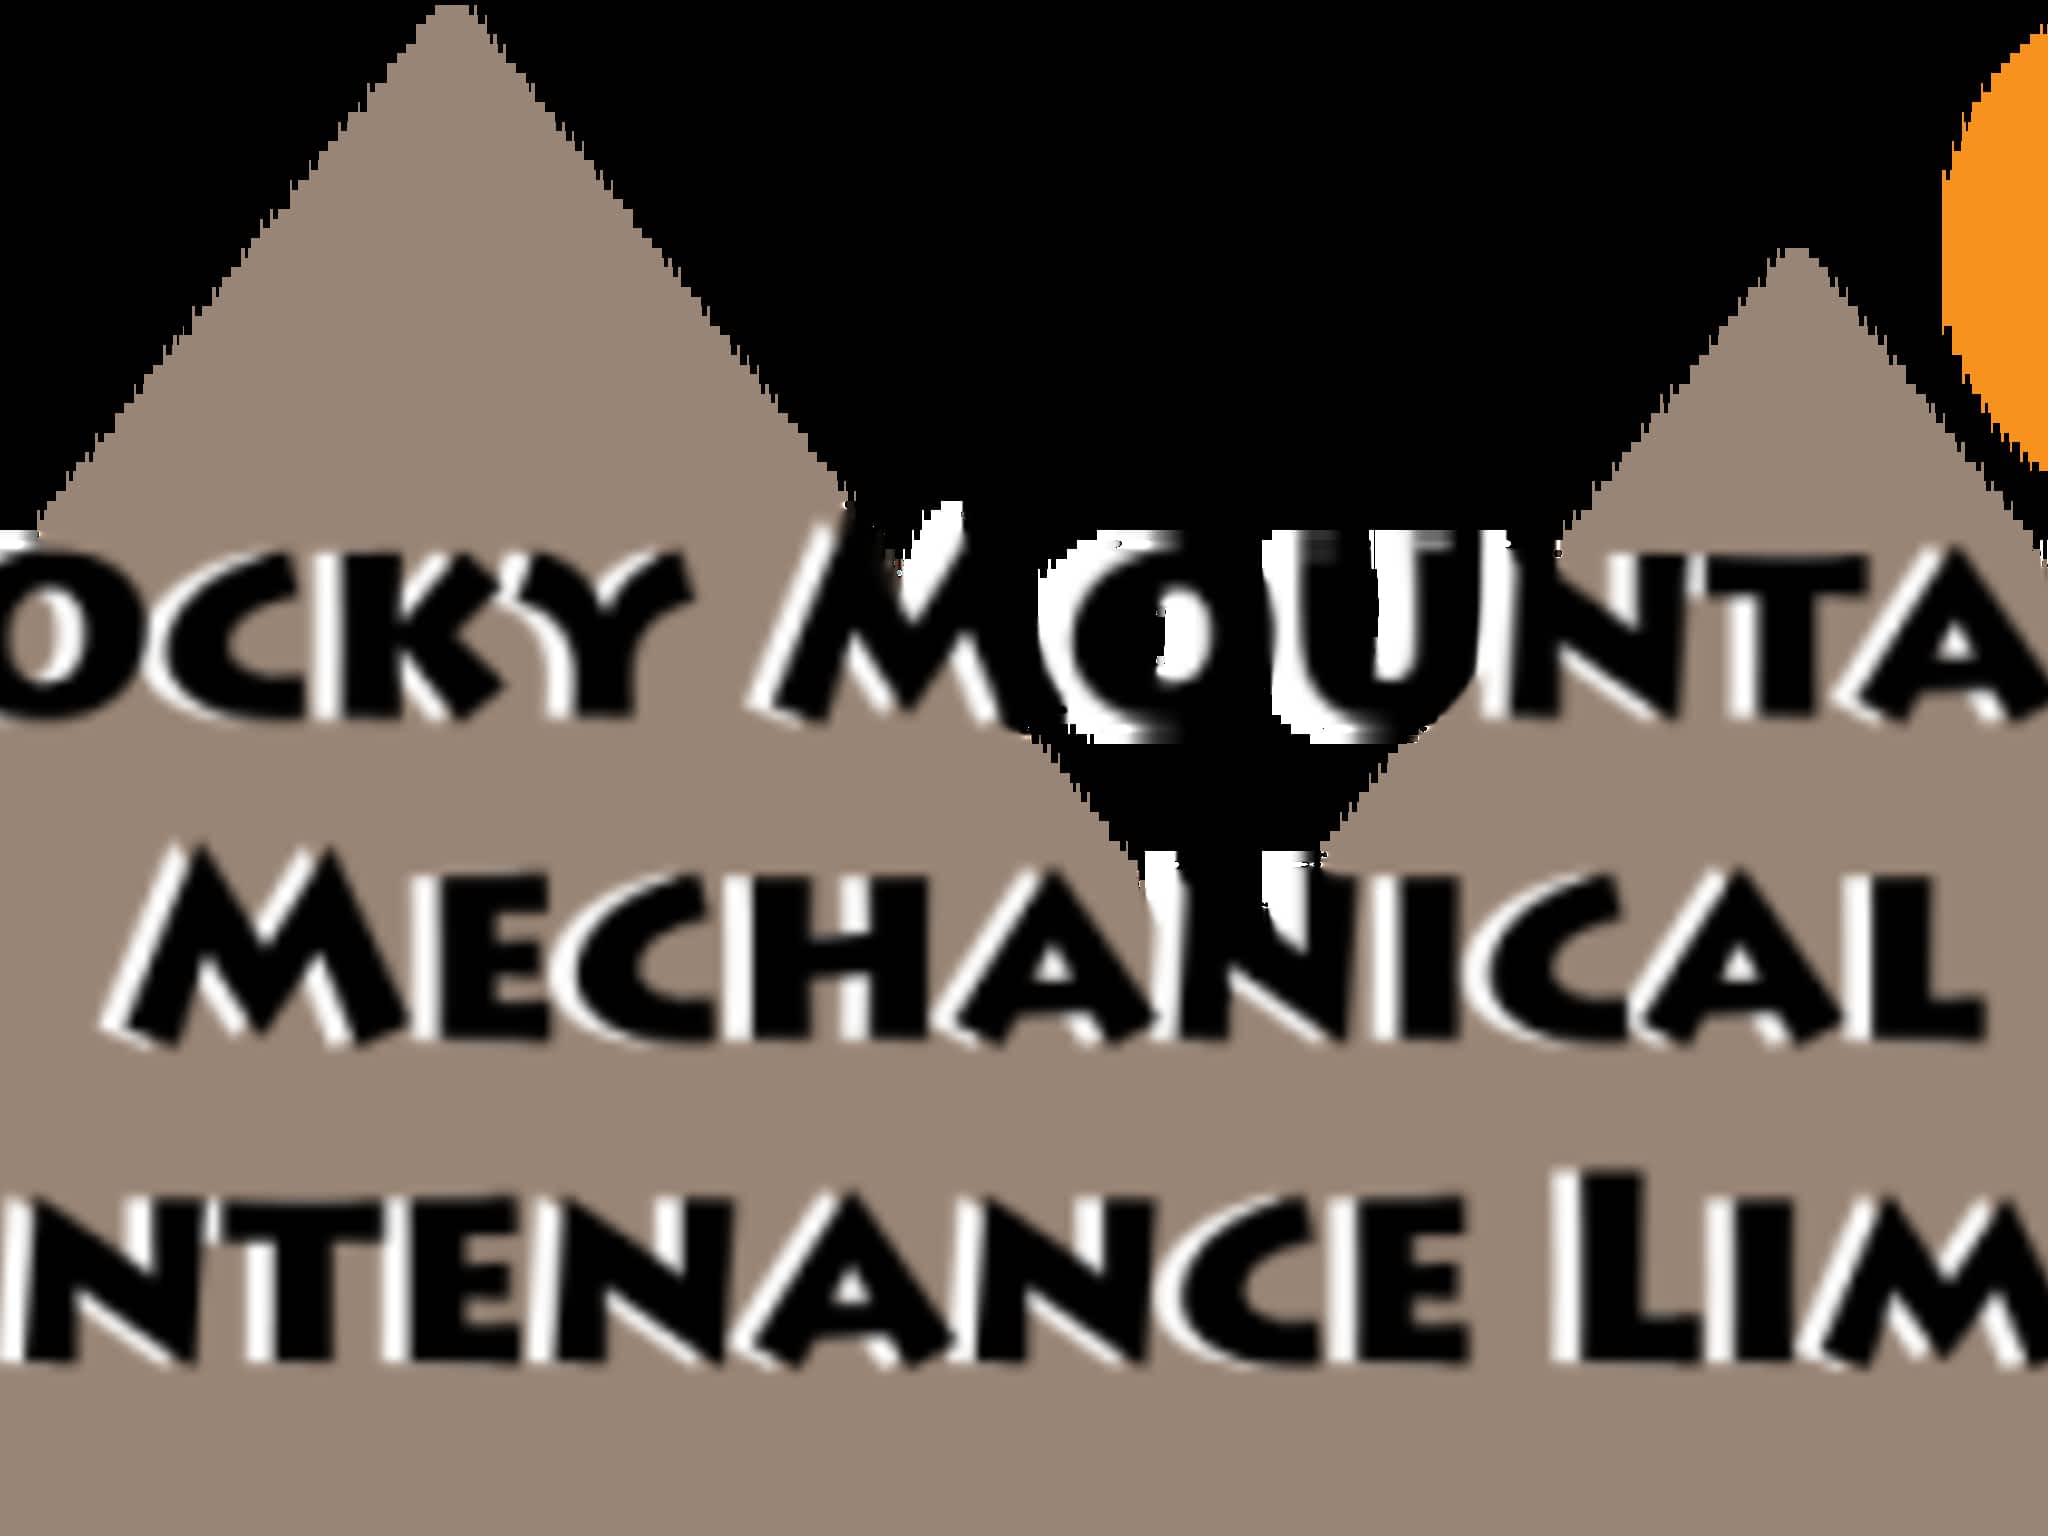 photo Rocky Mountain Mechanical Maintenance Limited